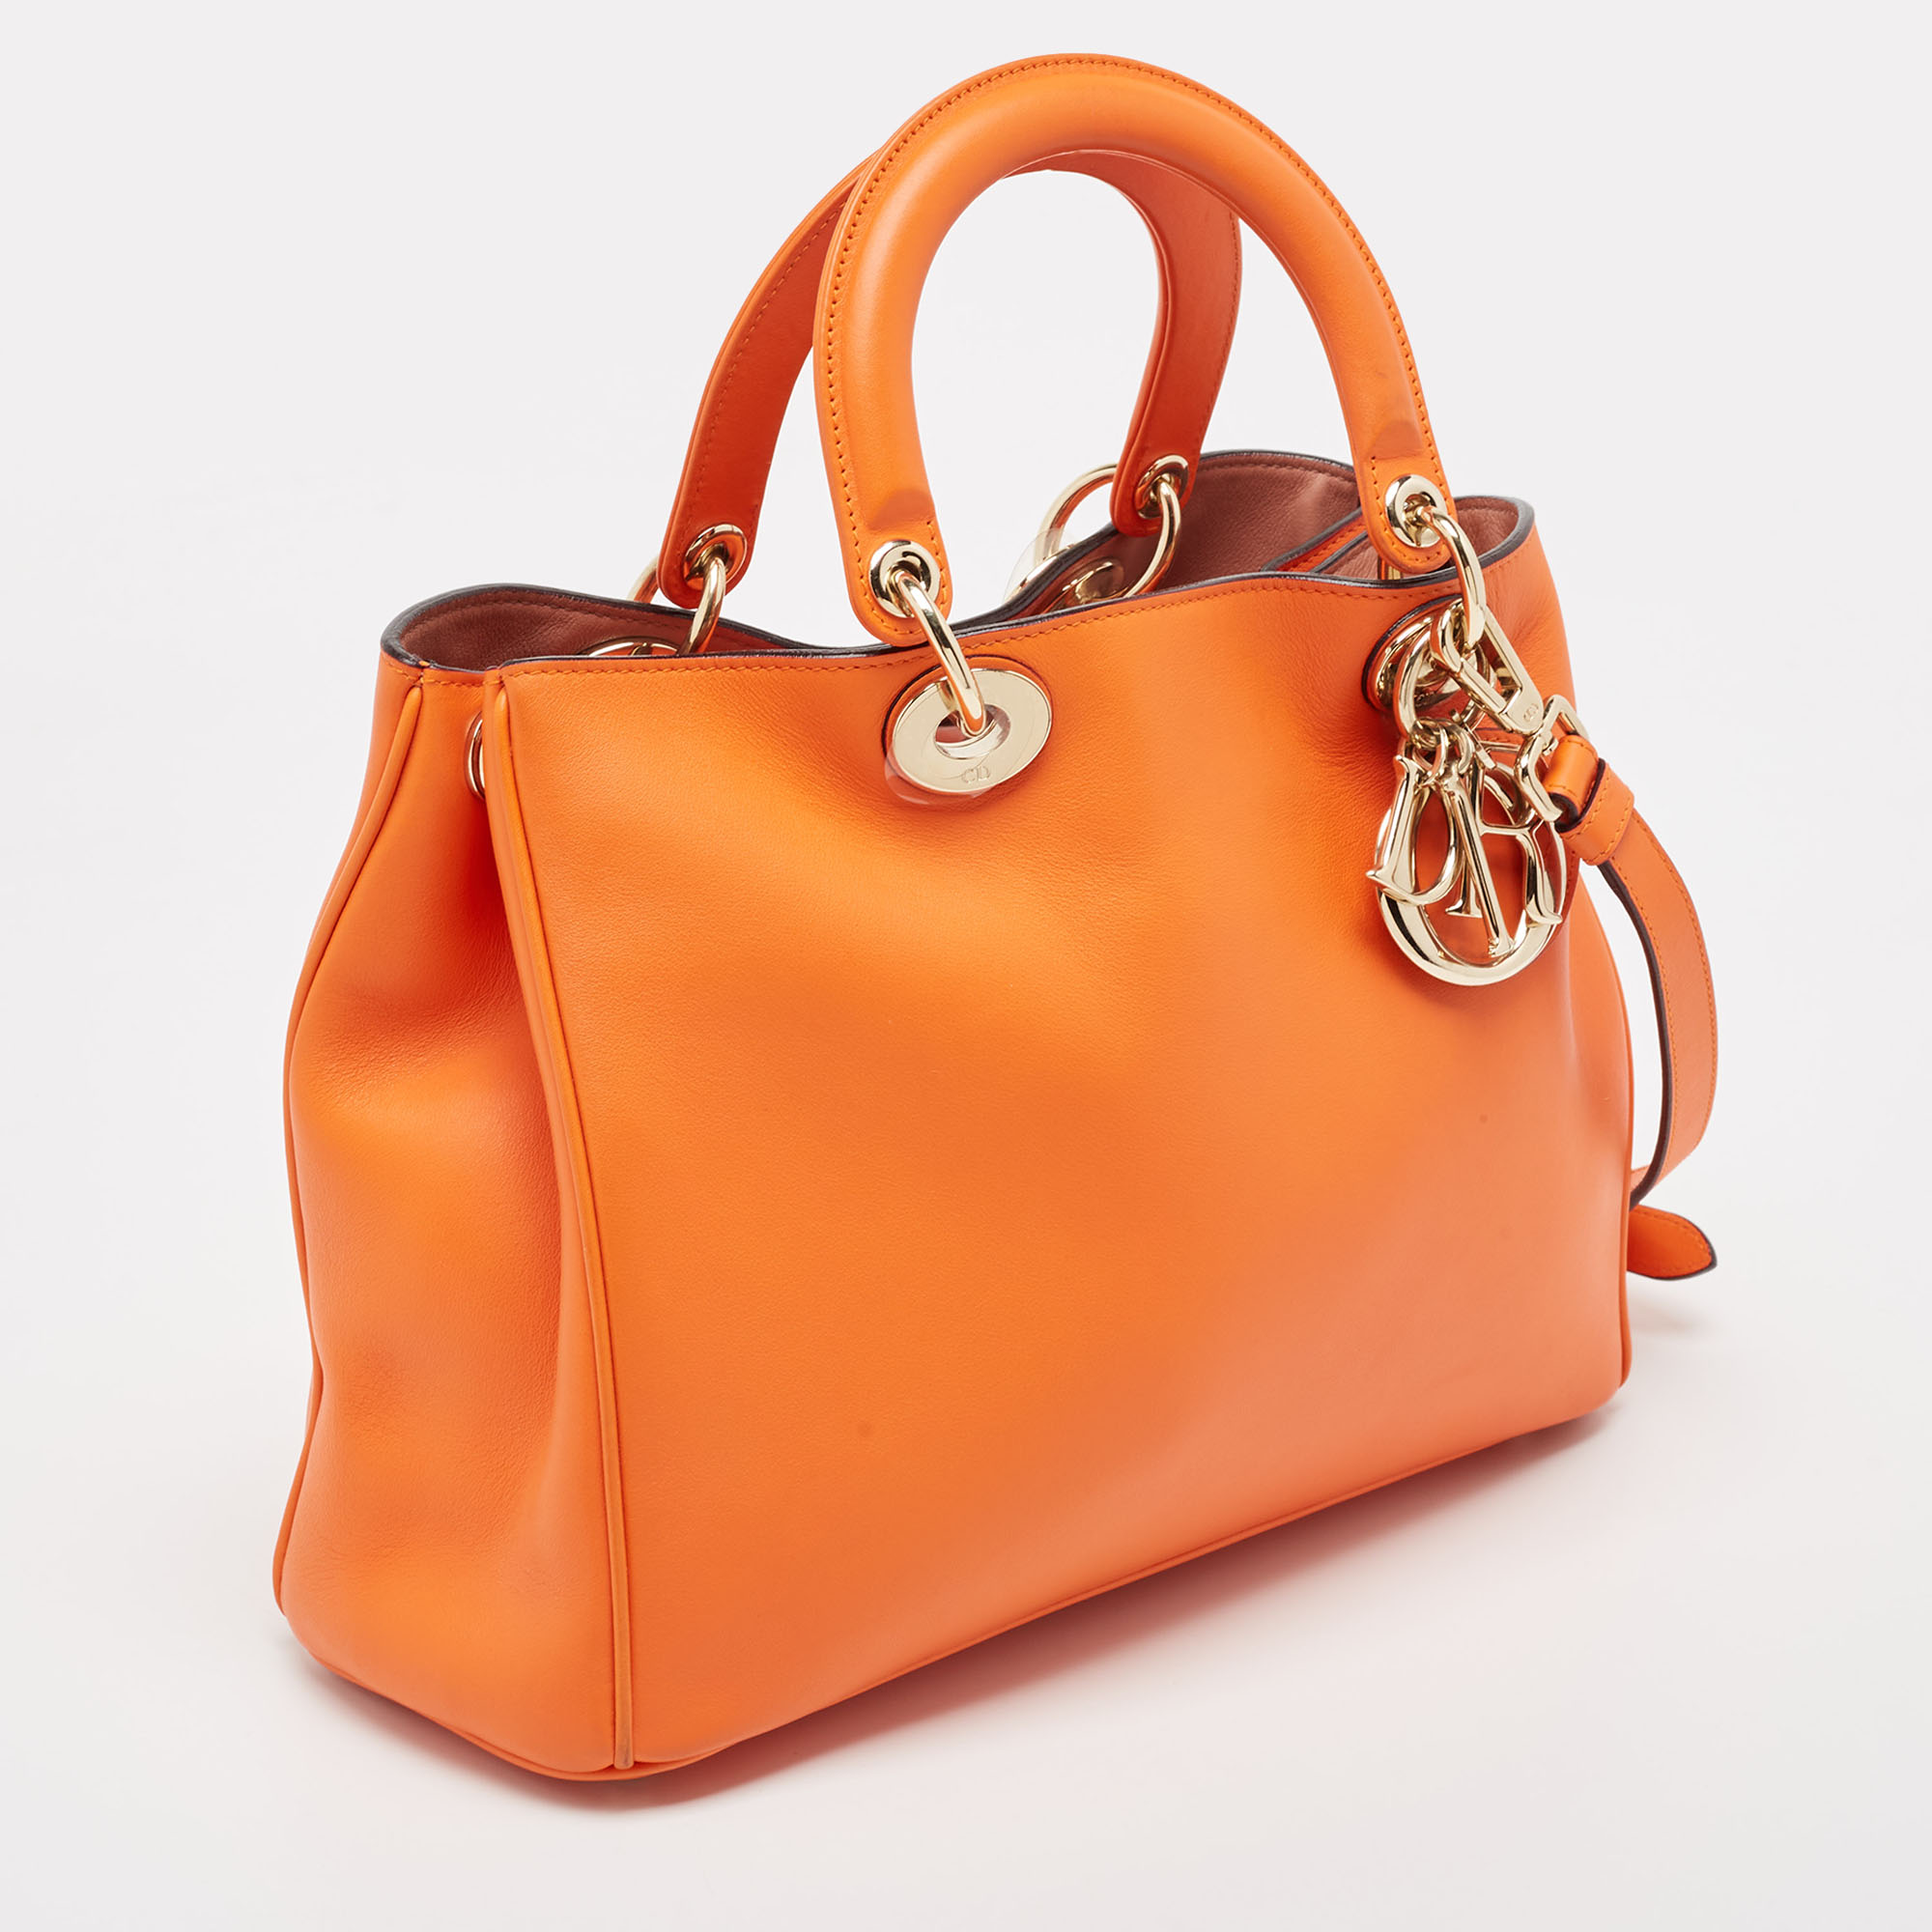 Dior Orange Leather Medium Diorissimo Shopper Tote